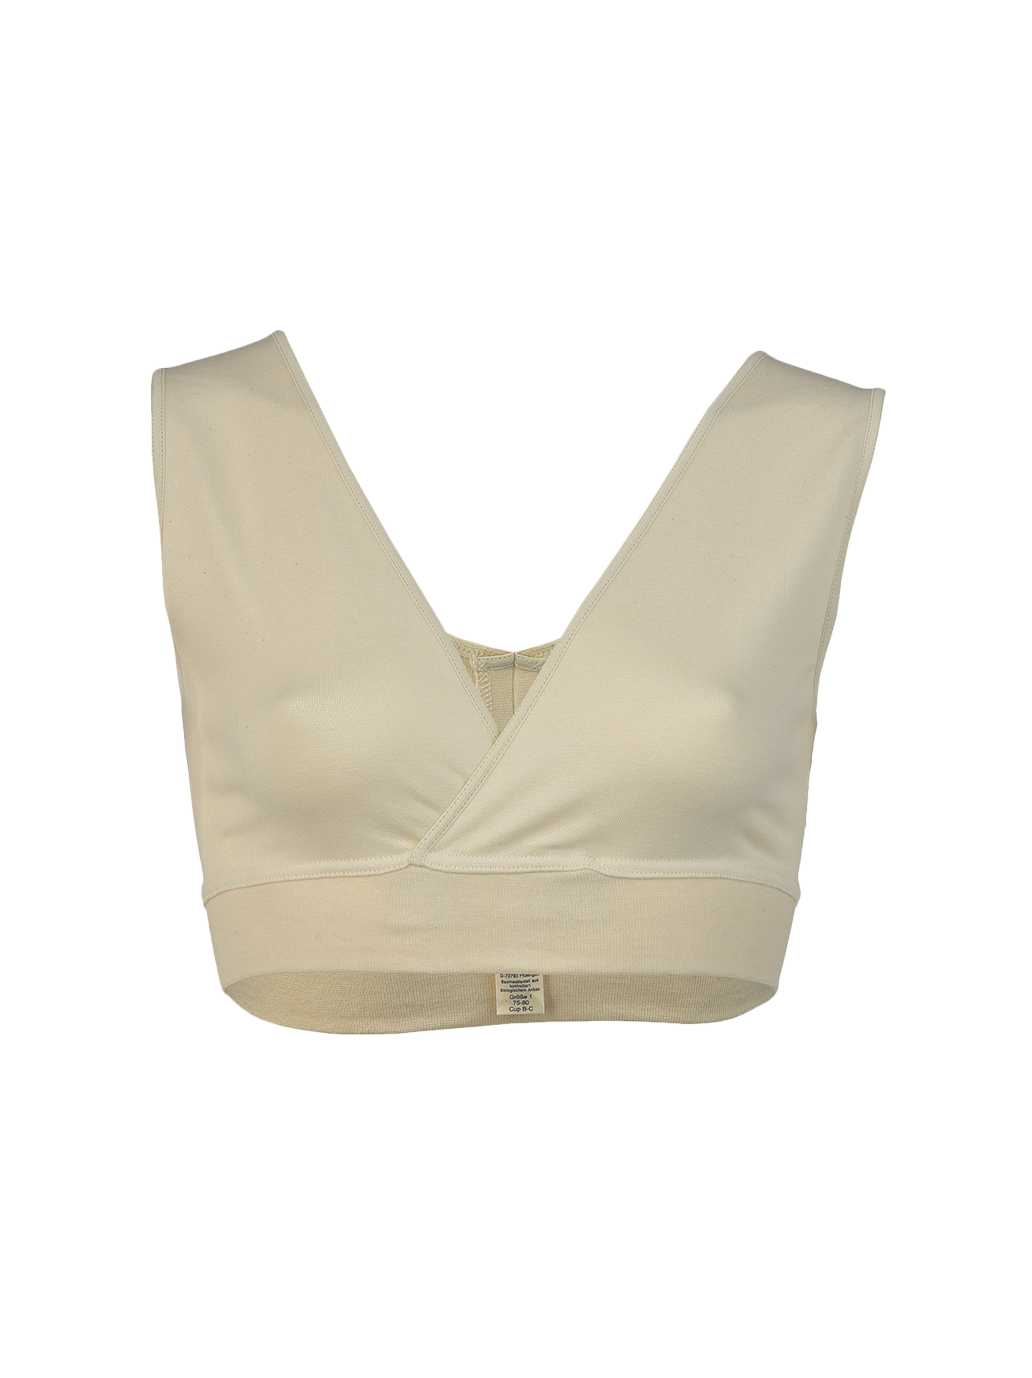 comfortable nursing bra made of certified cotton